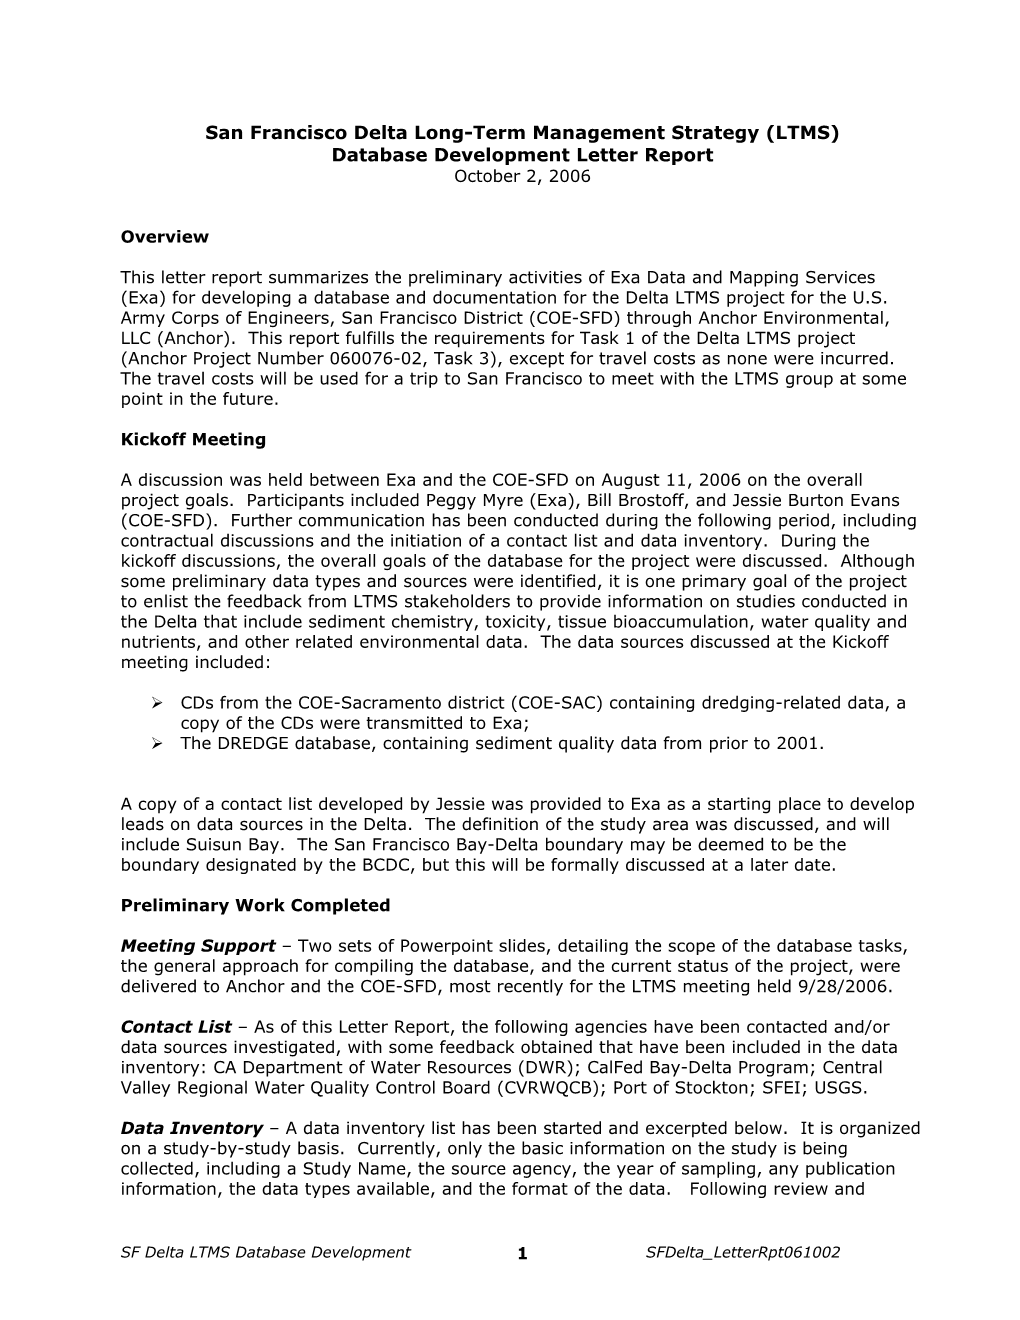 San Francisco Delta Long-Term Management Strategy (LTMS) Database Development Letter Report October 2, 2006